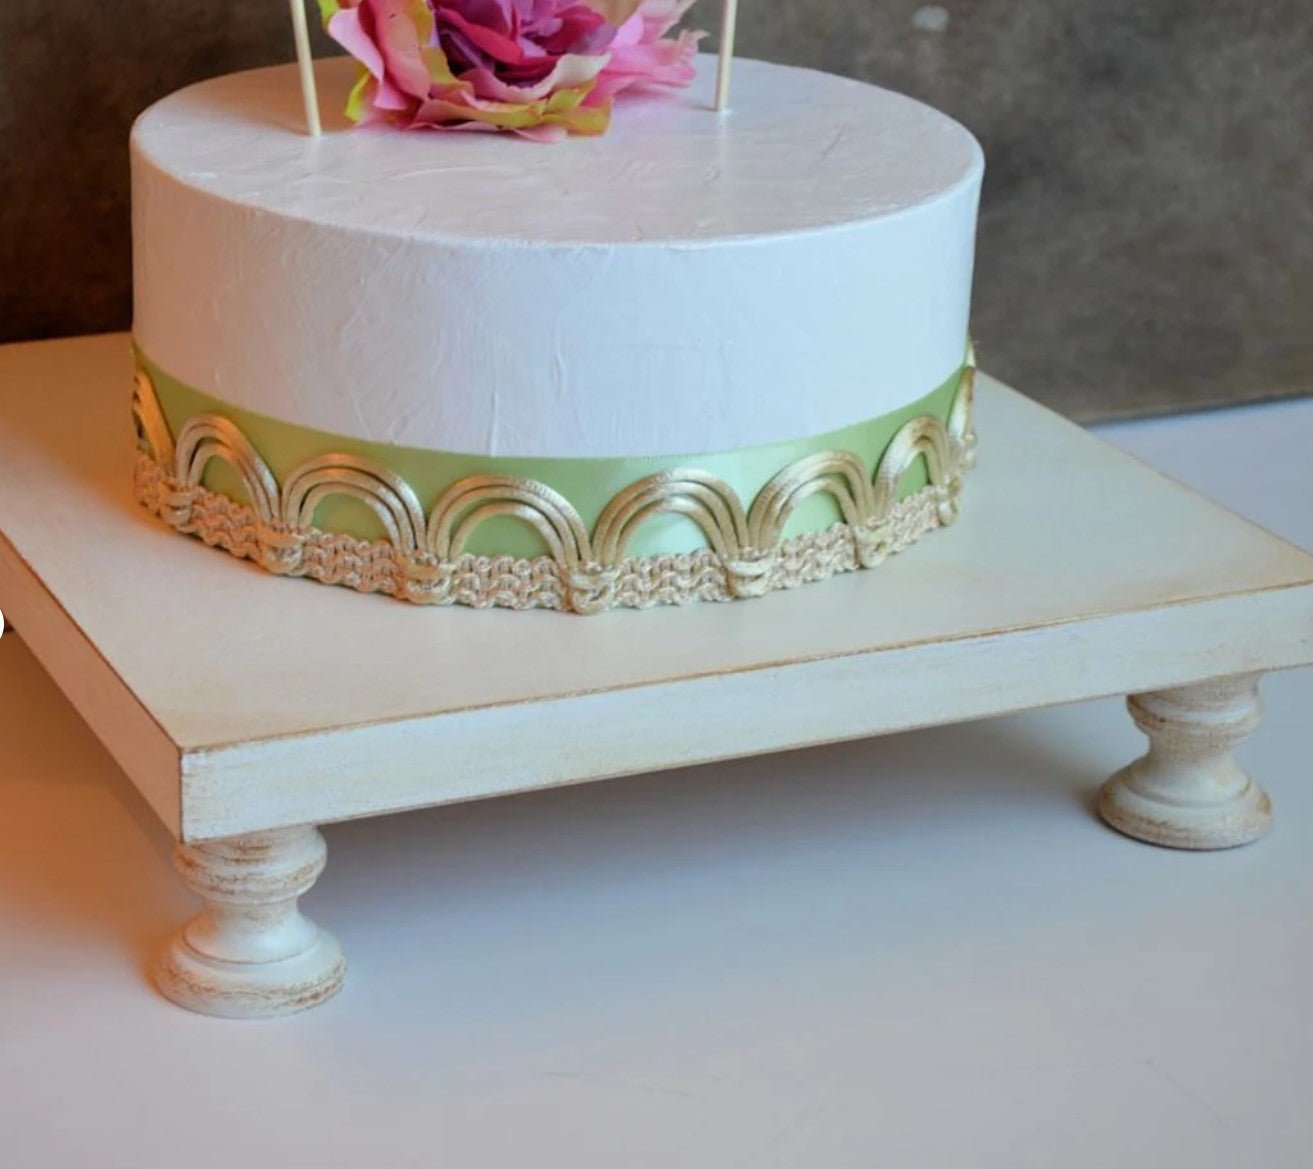 Cake stand cupcake stand, dessert table decor... 14" square wedding cake pedestal, Rustic vintage white color